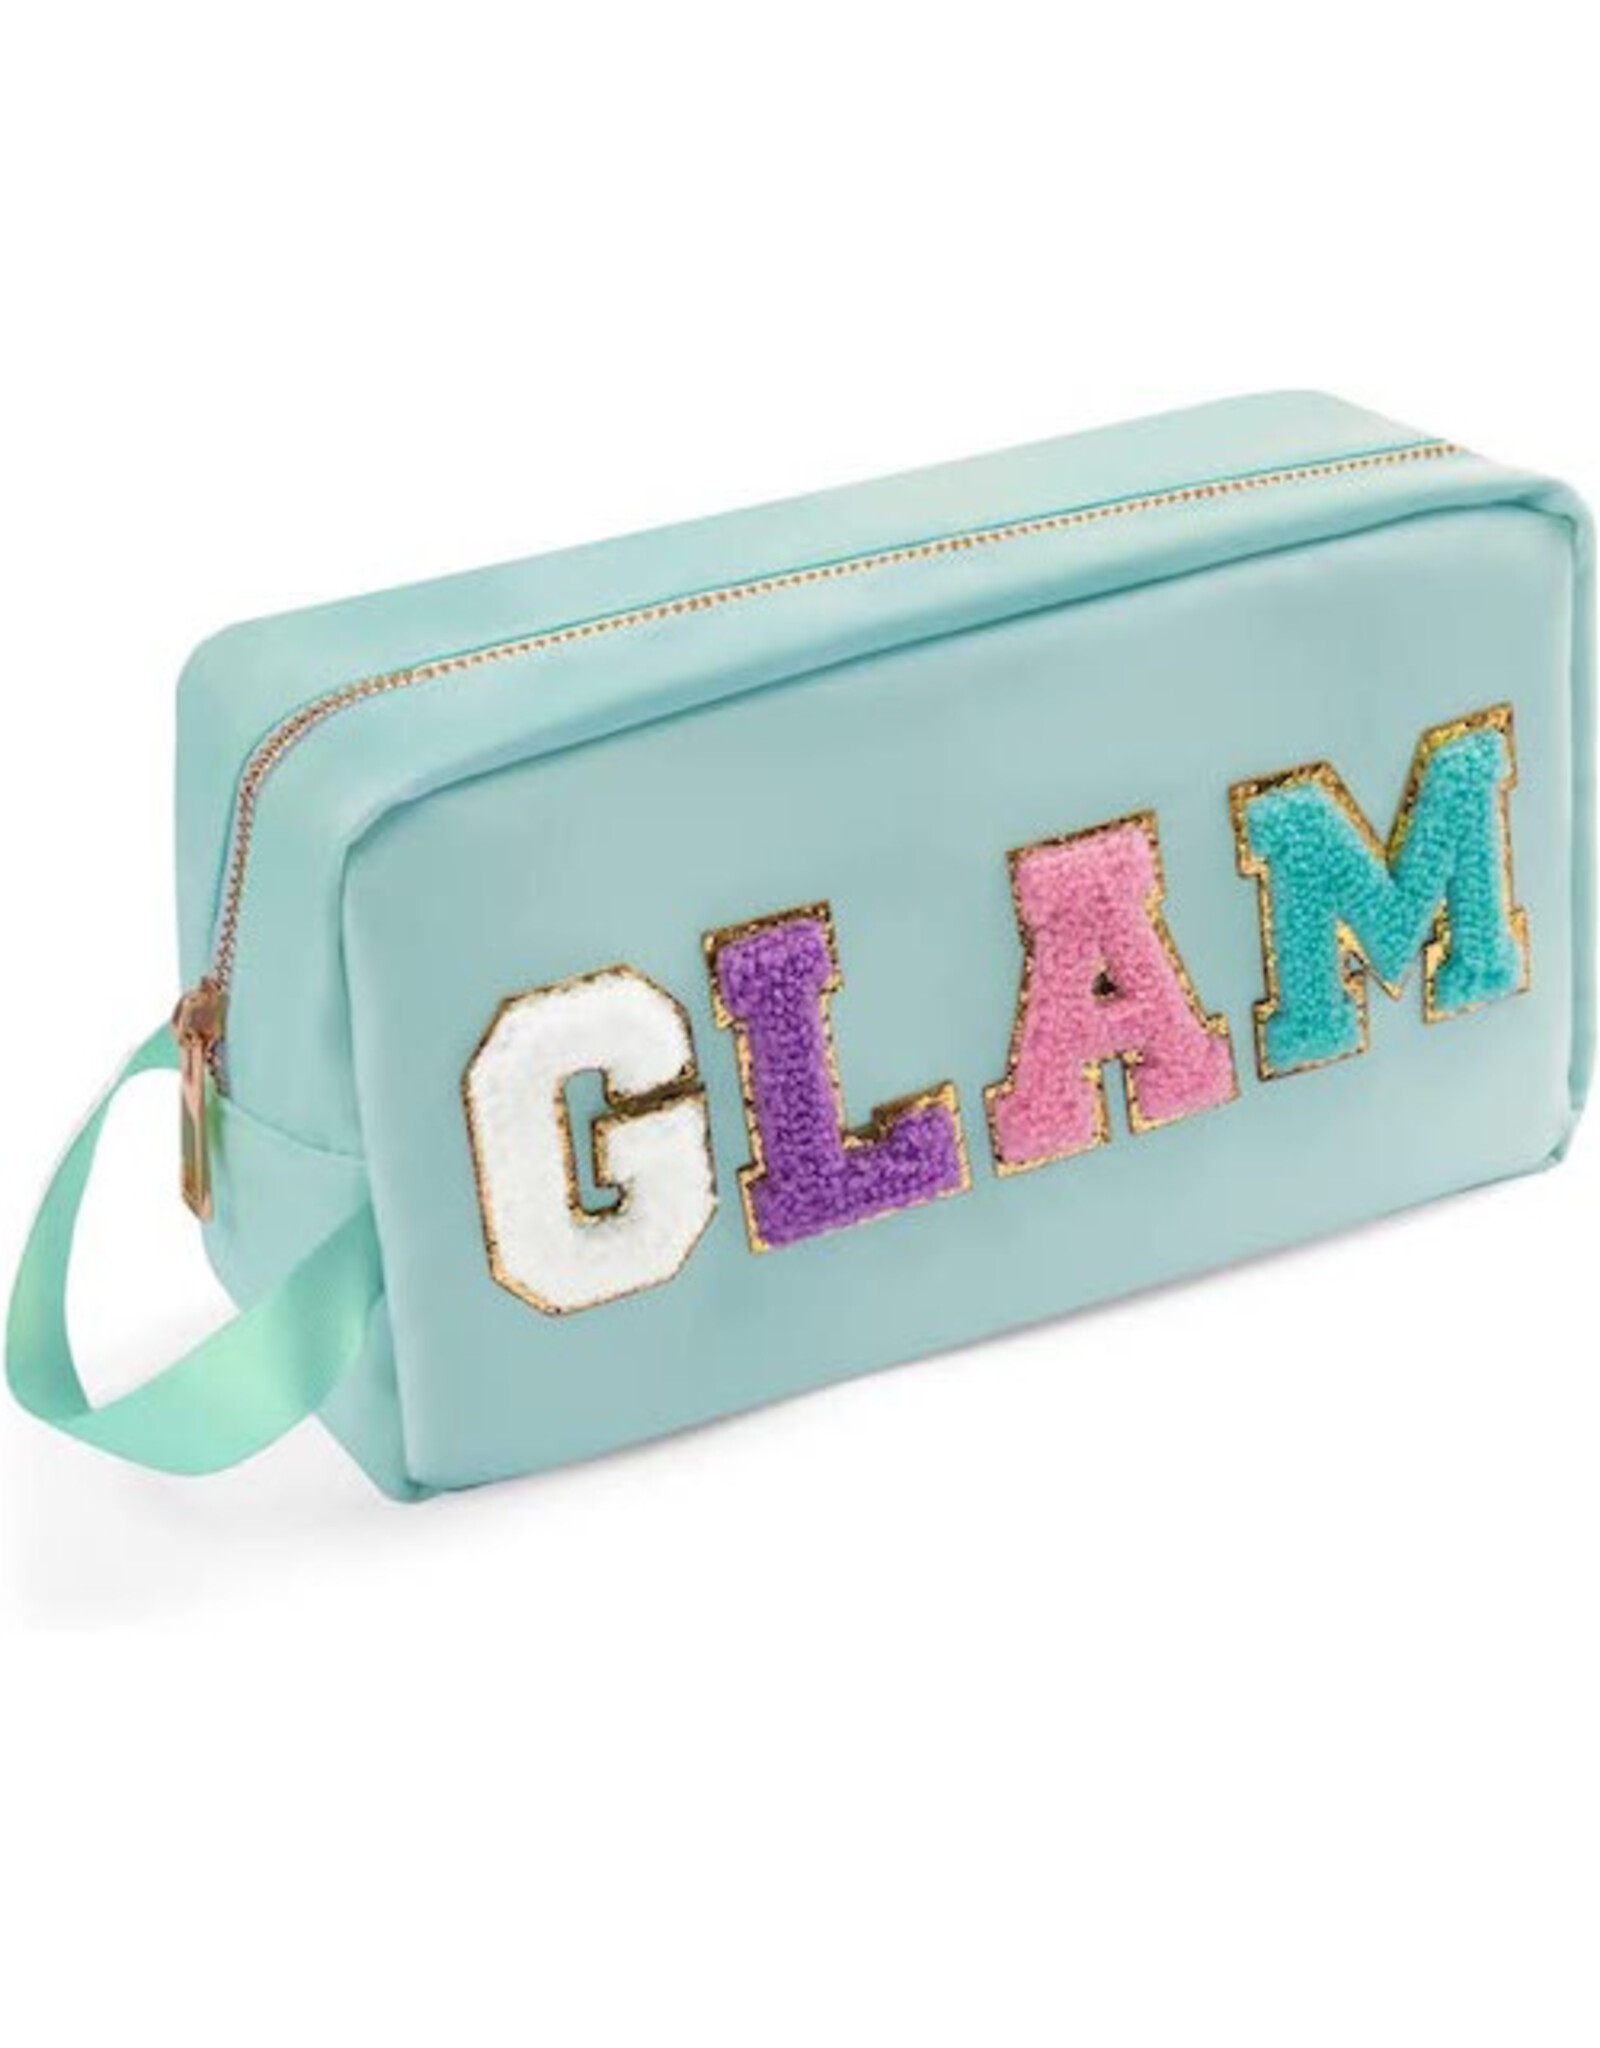 Varsity Accessory Bag "GLAM"